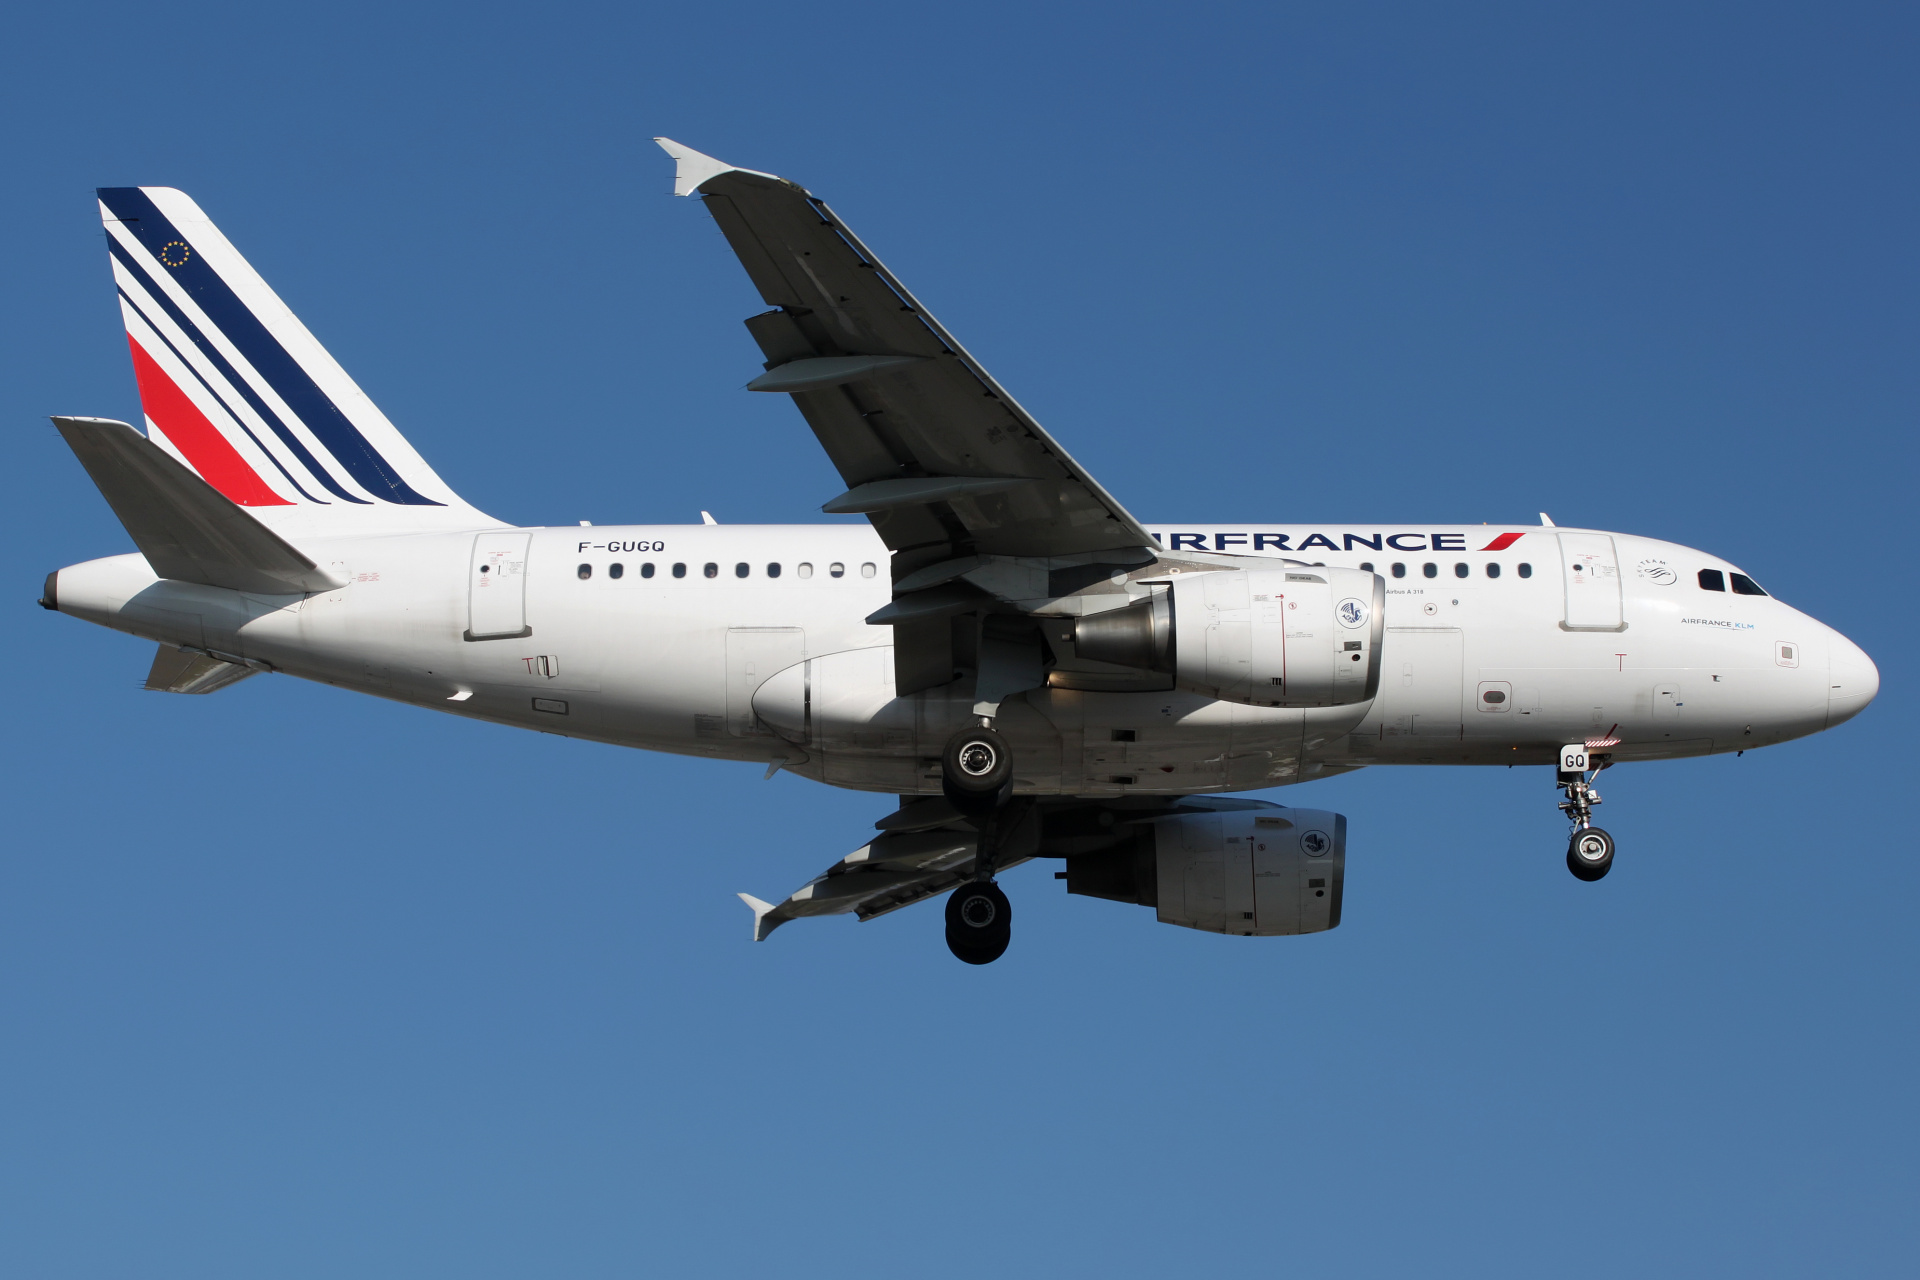 F-GUGQ (Aircraft » EPWA Spotting » Airbus A318-100 » Air France)